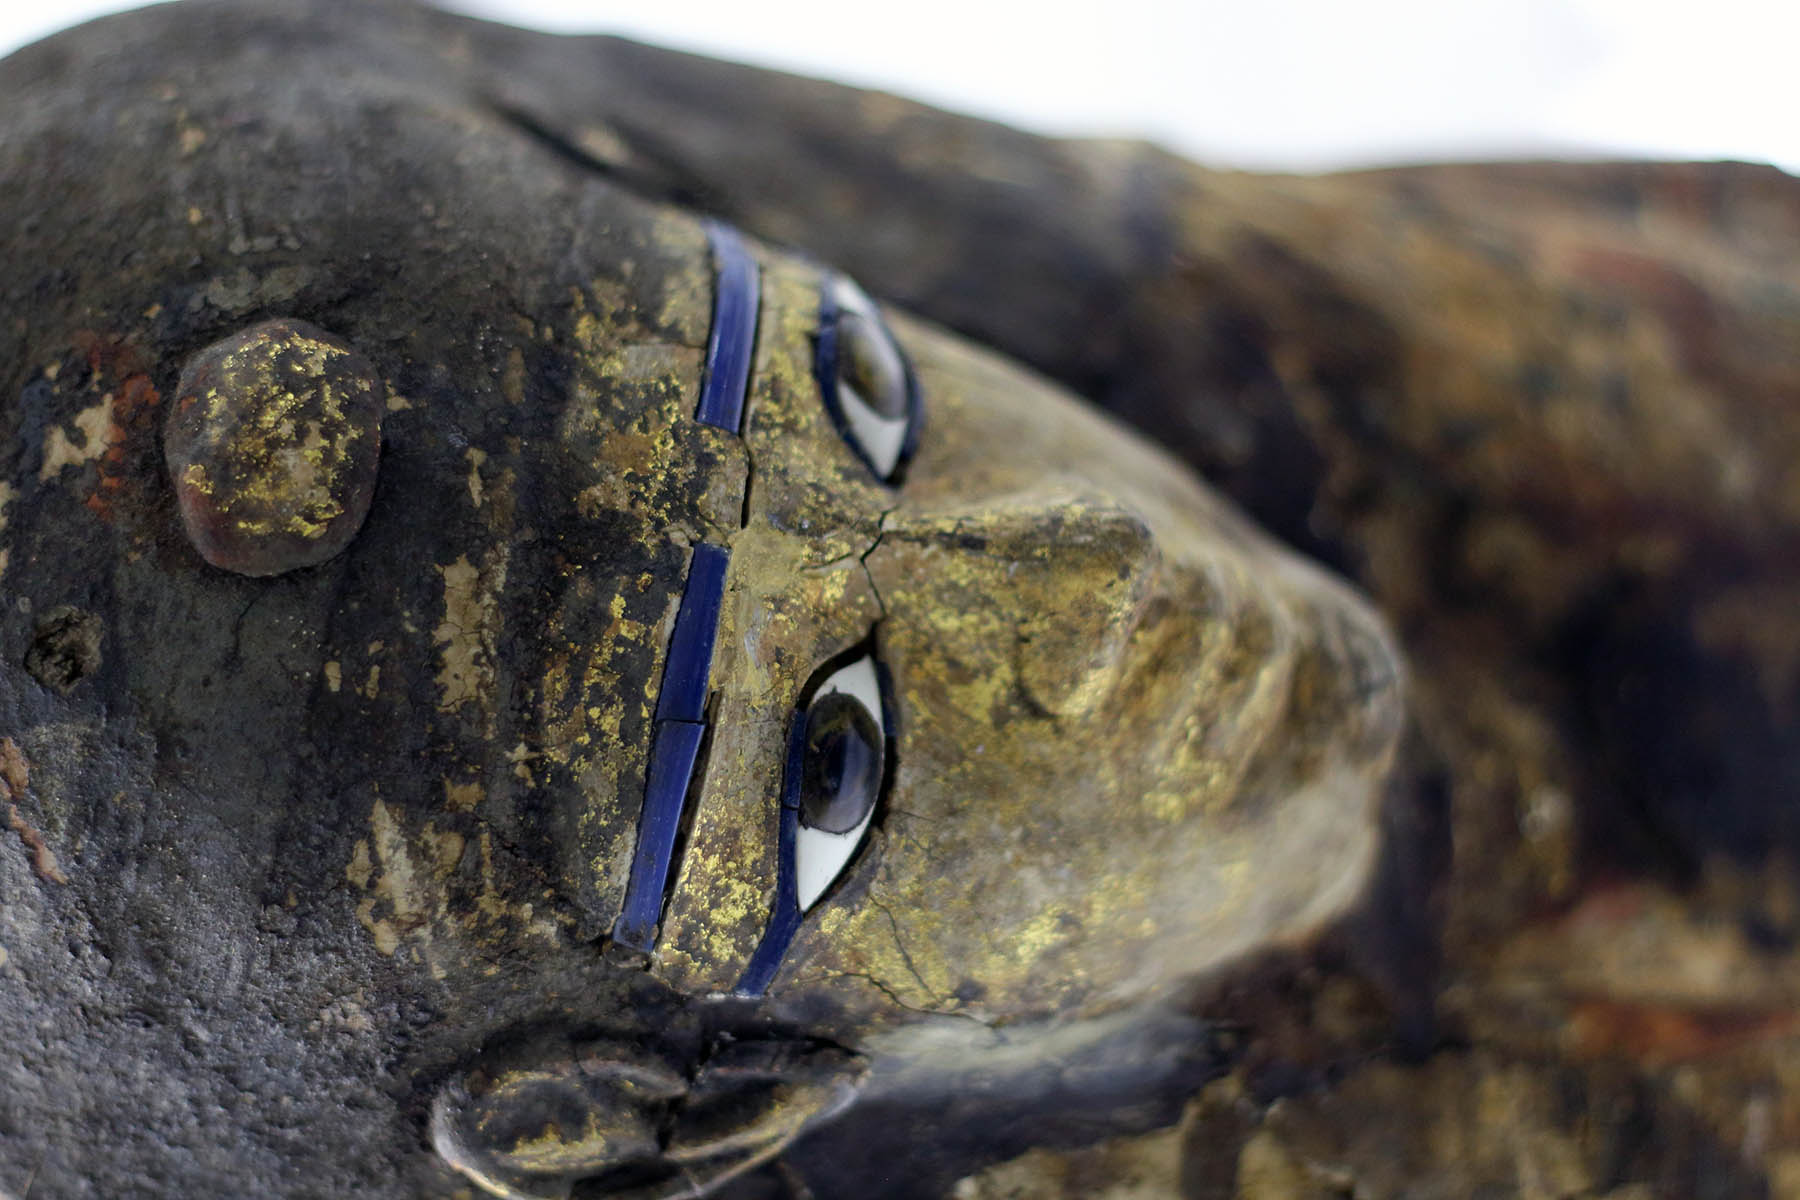 Manchester Mummy 1770's face mask.